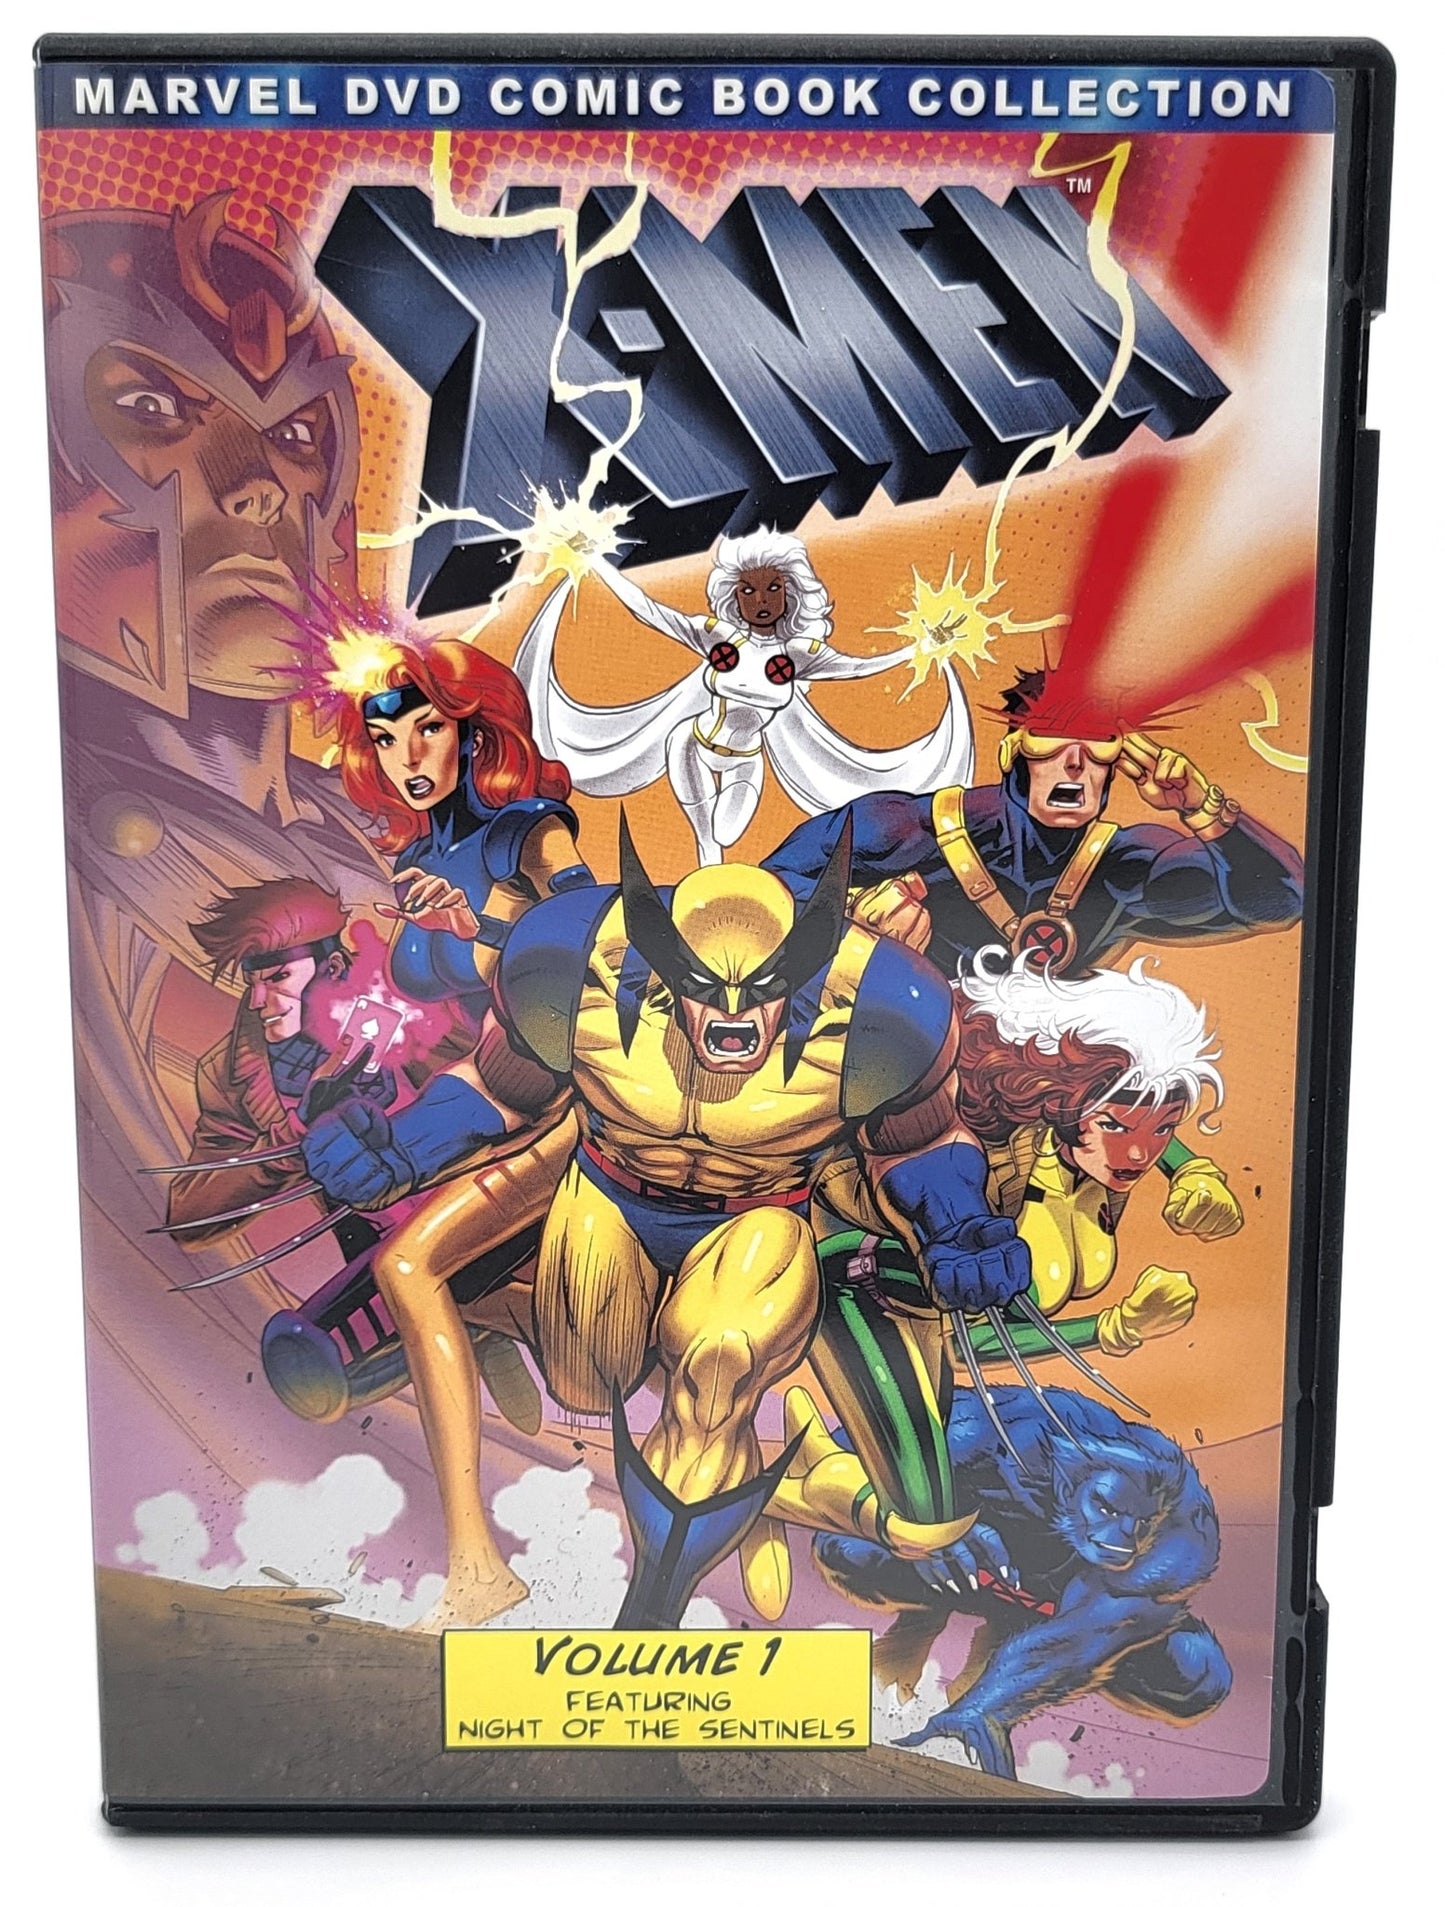 Marvel Studio - X-Men Volume 1 Night of the Sentinels | DVD | Featuring Night of the Sentinels - Full Screen - DVD - Steady Bunny Shop